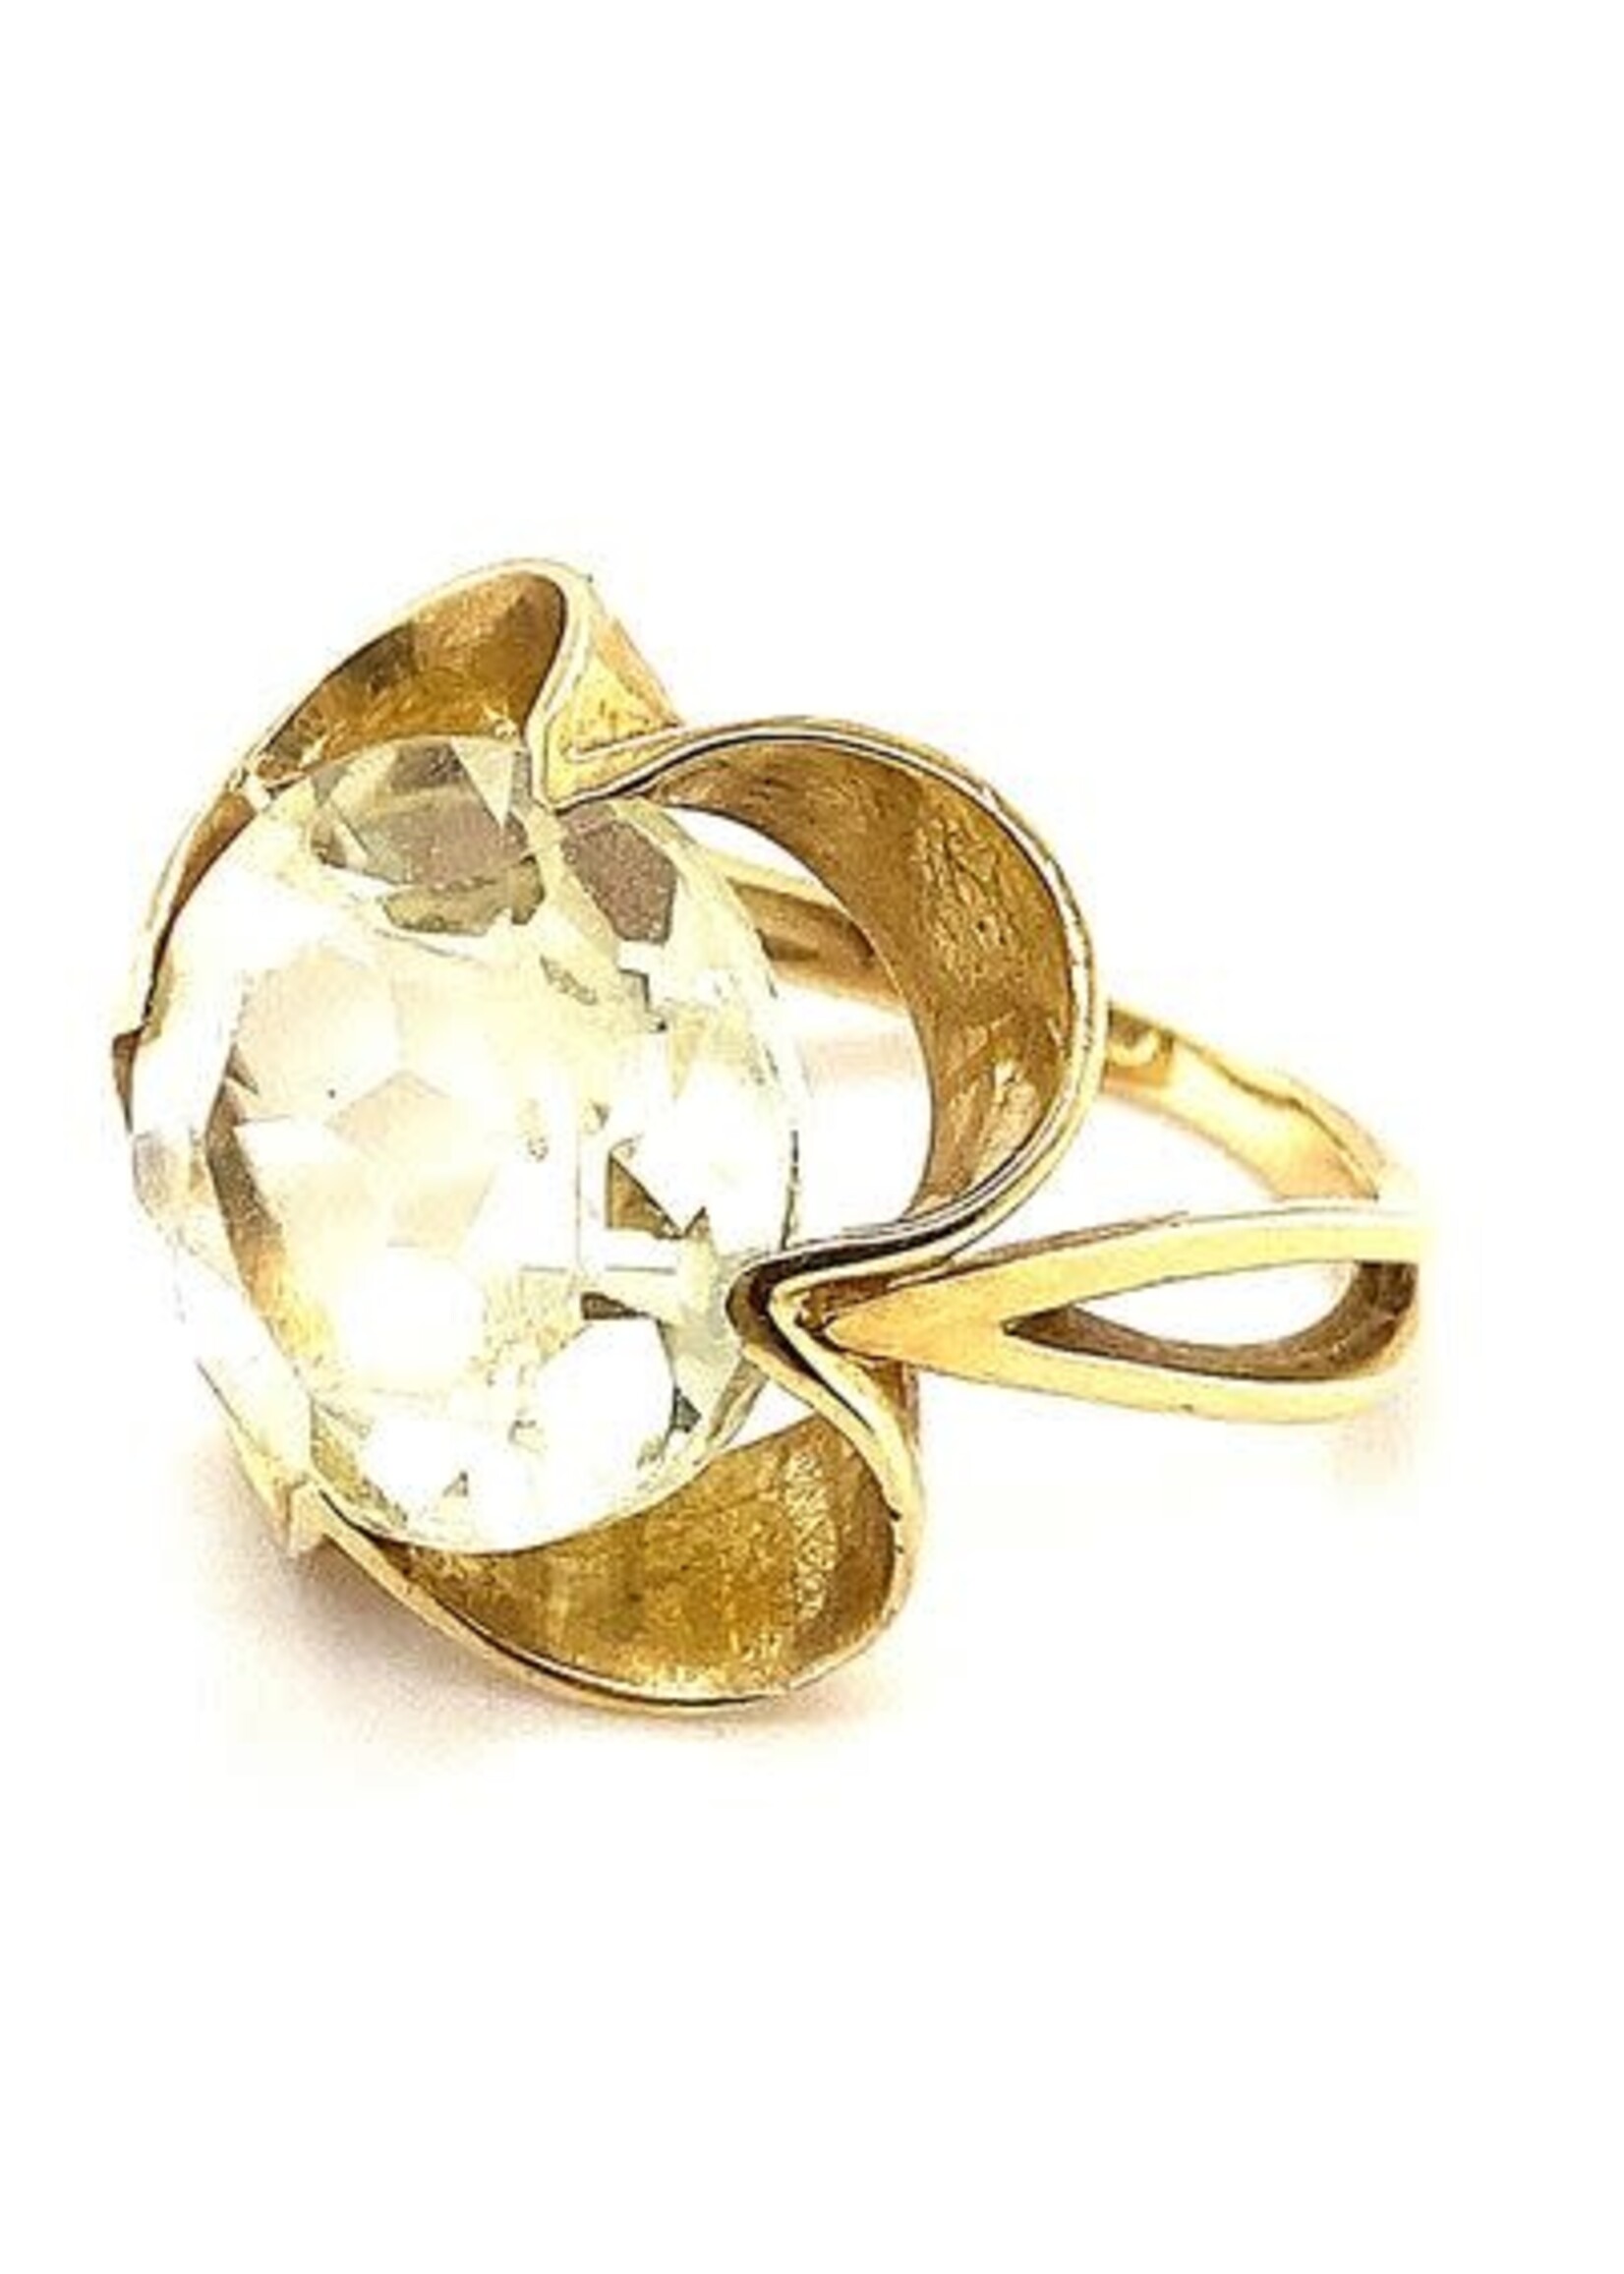 Vintage & Occasion Occasion gouden design ring met grote lemonkwarts edelsteen